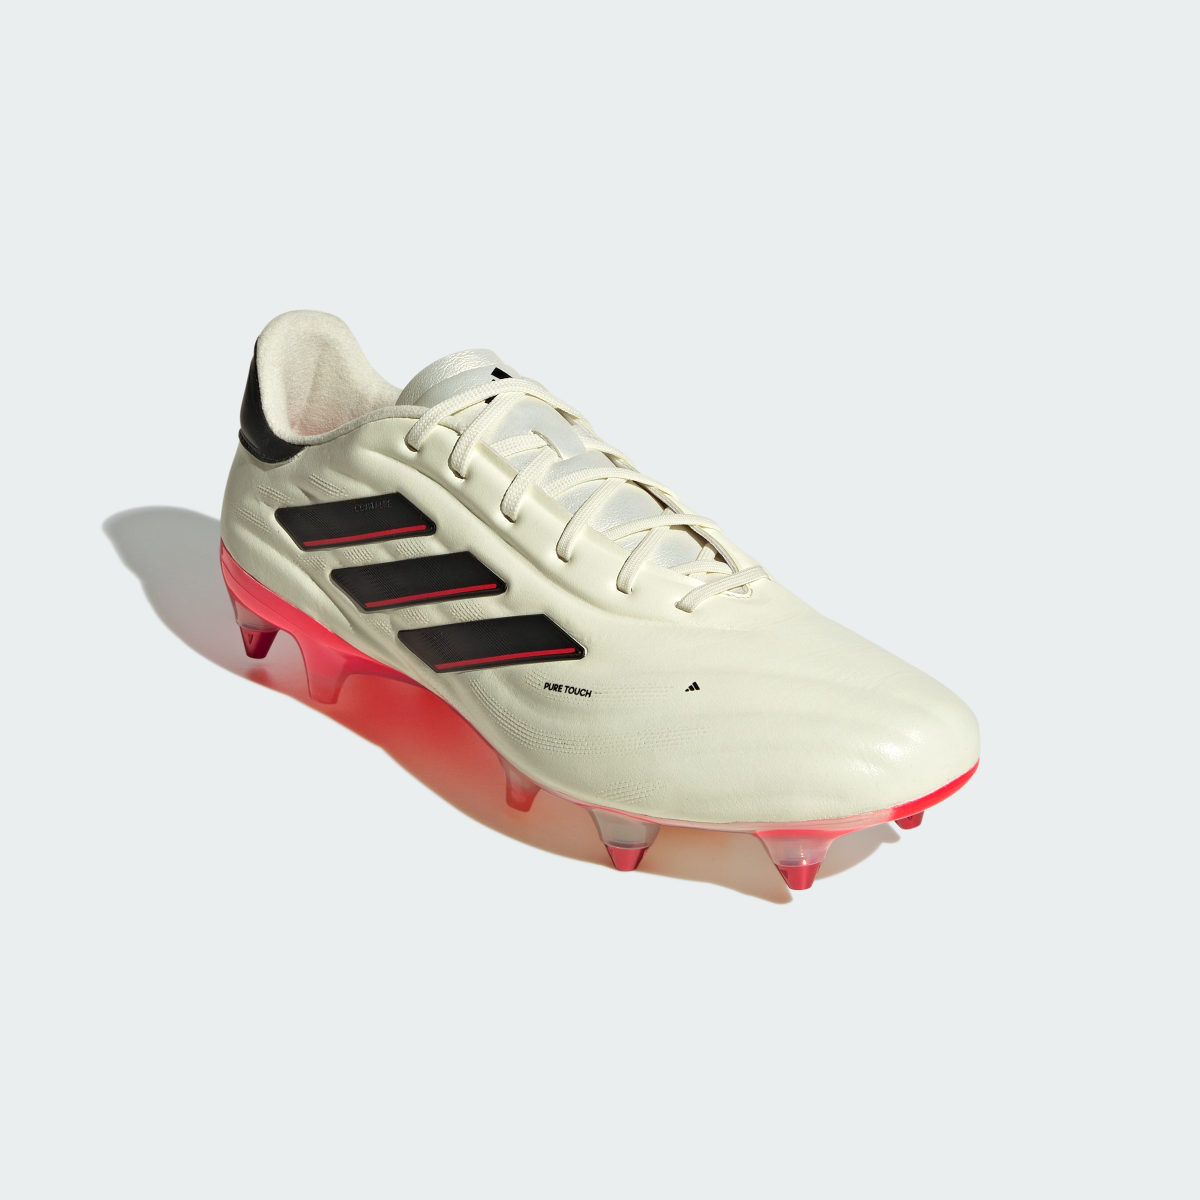 Adidas Copa Pure II Elite Soft Ground Boots. 8